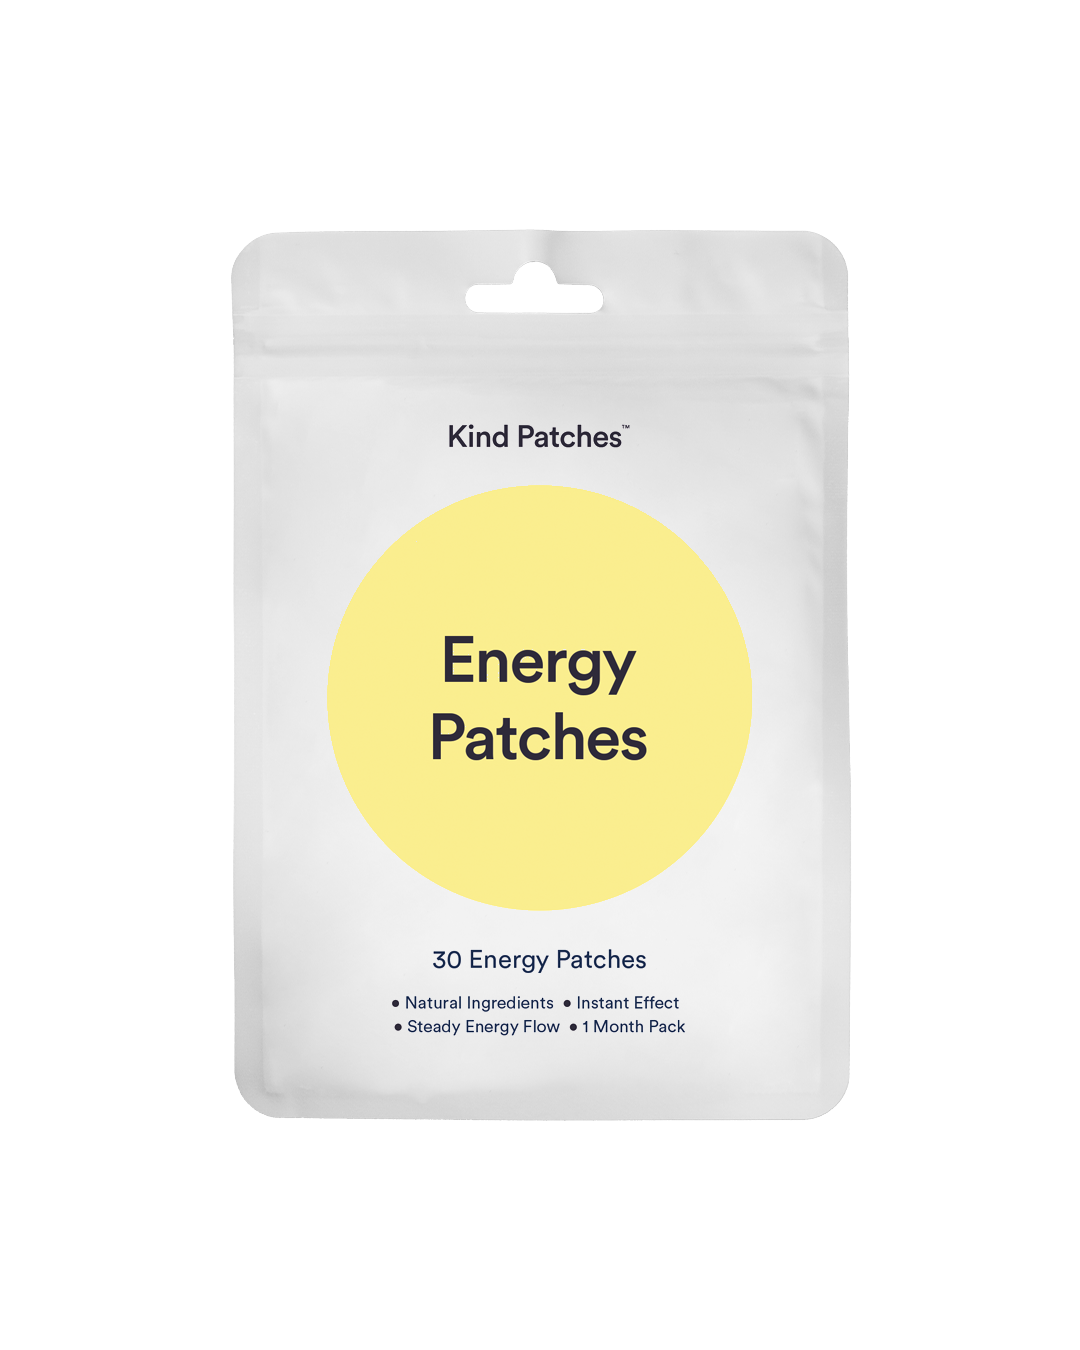 Energy Effect Pack